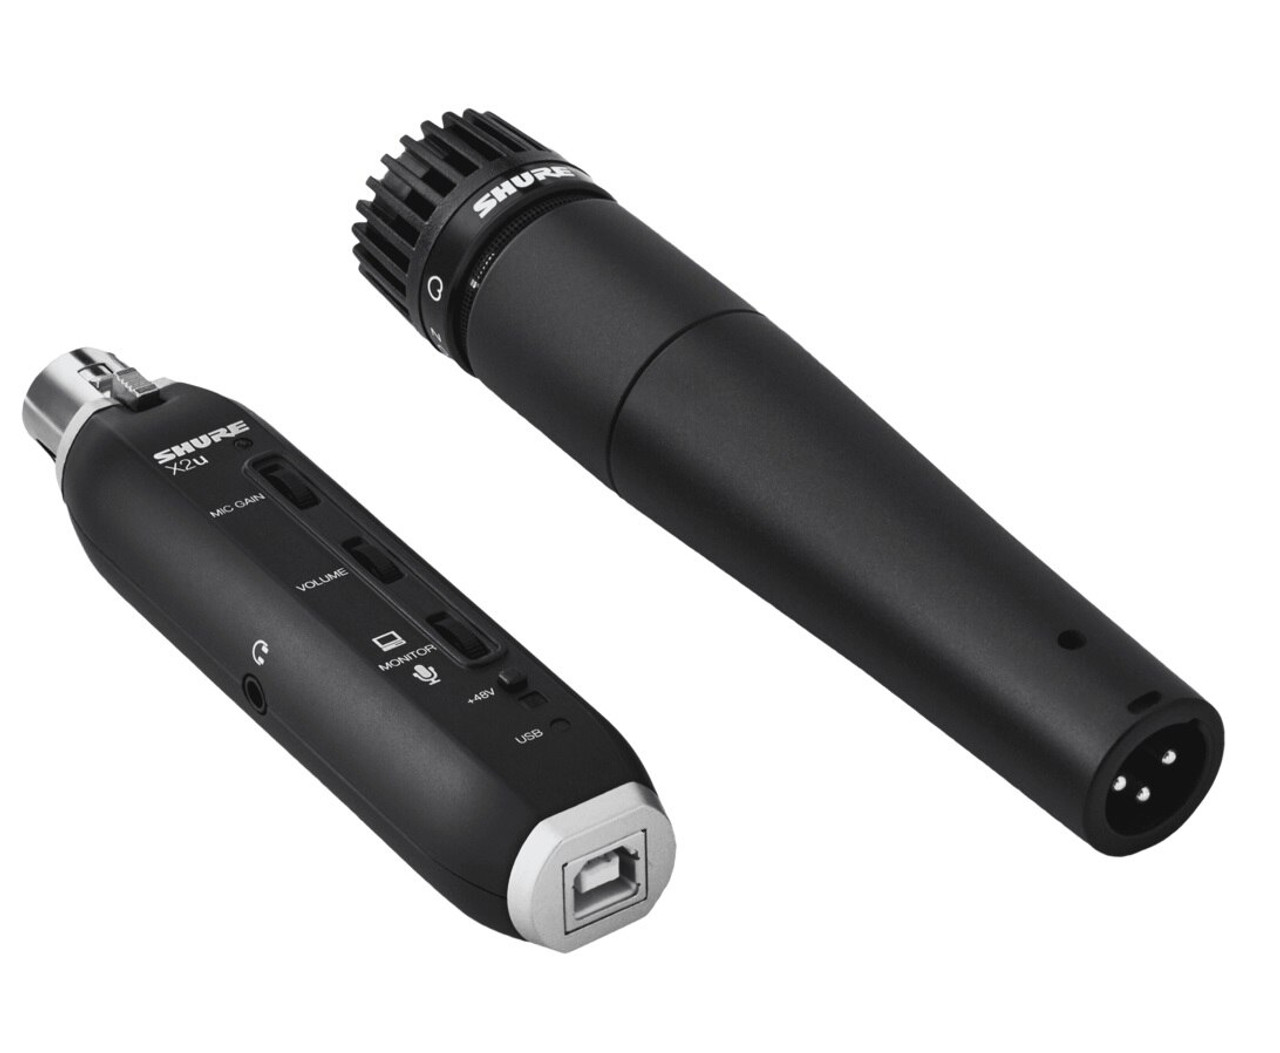 Shure SM57-X2U Microphone Dynamic Instrument Cardioid with USB